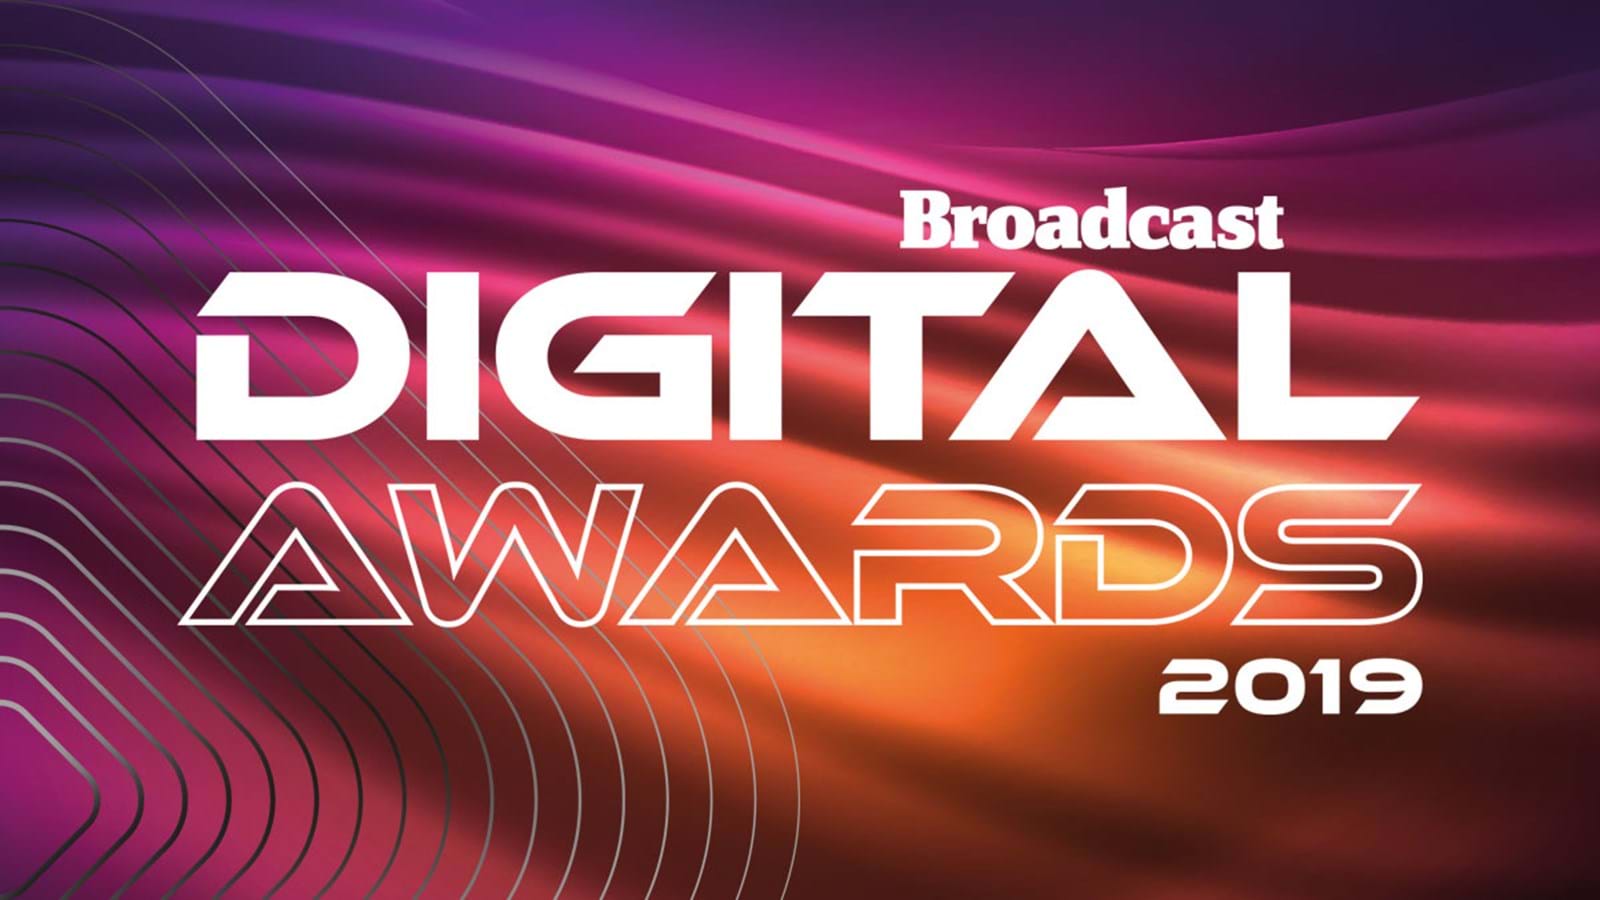 Mentorn Media and Firecracker Films shortlisted for Broadcast Digital Awards 